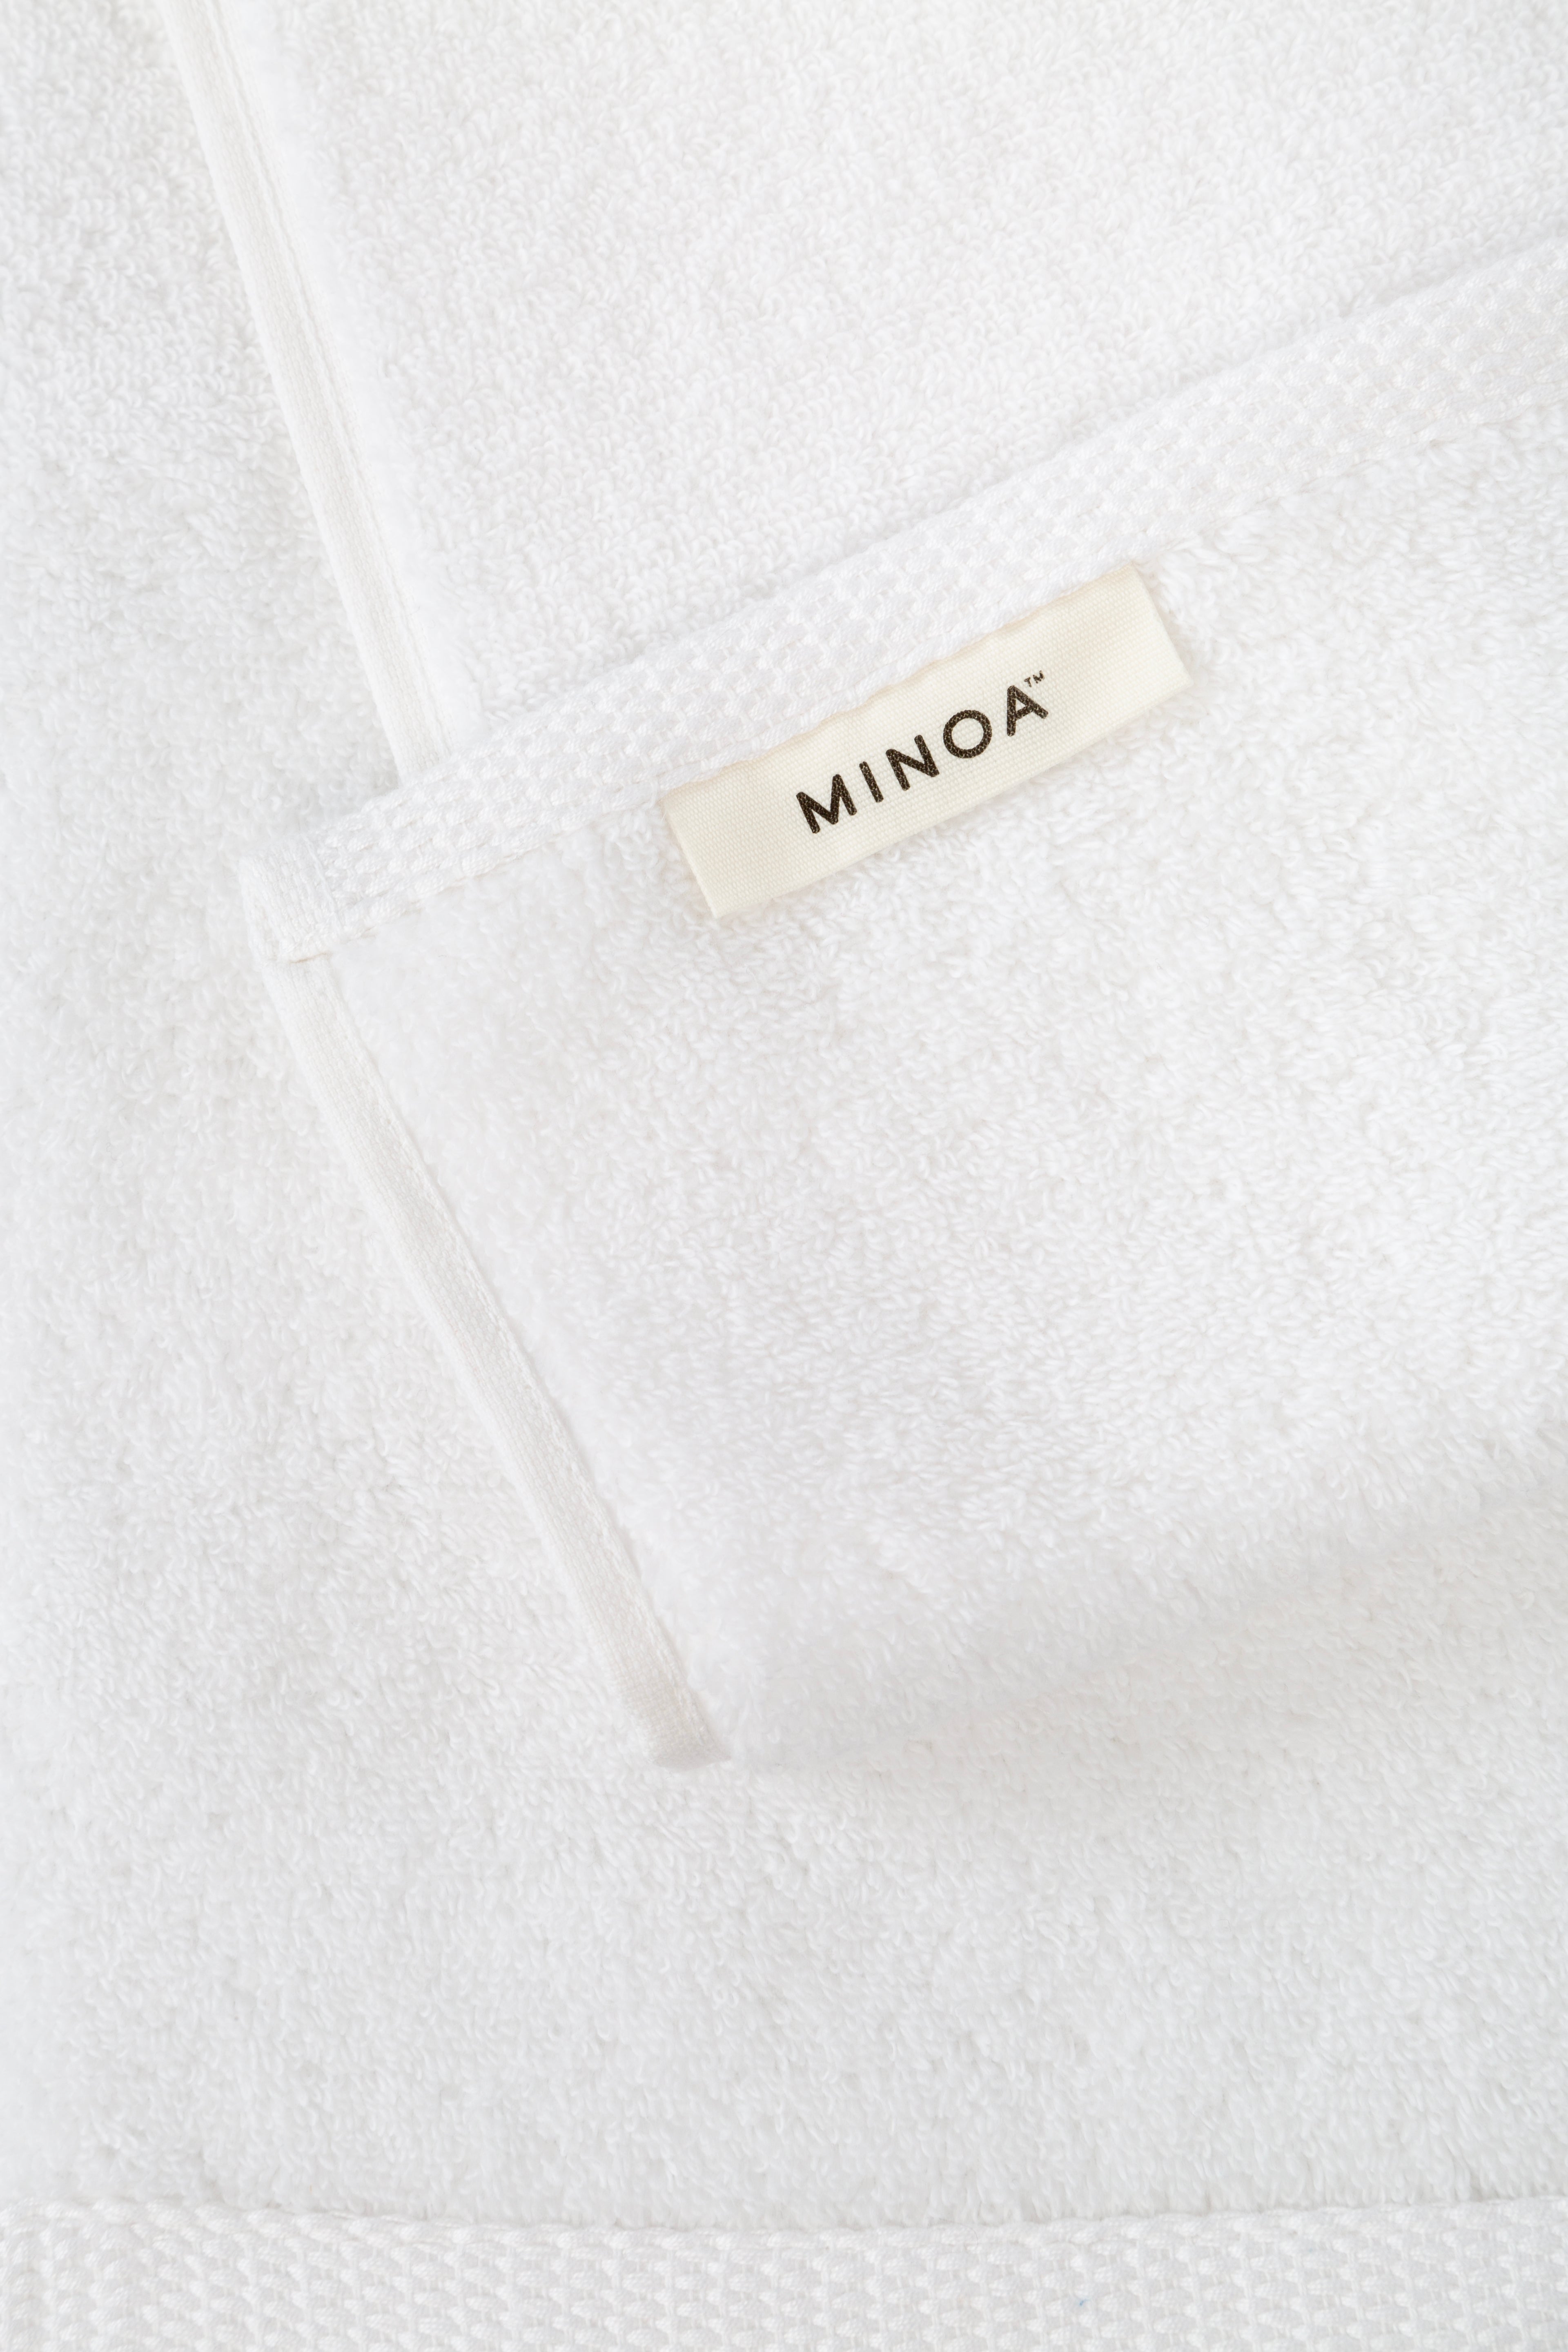 Minoa - USA Canada - Sustainable Luxury - Plush Lite Aegean Cotton Large Bath Towel Pack of Four